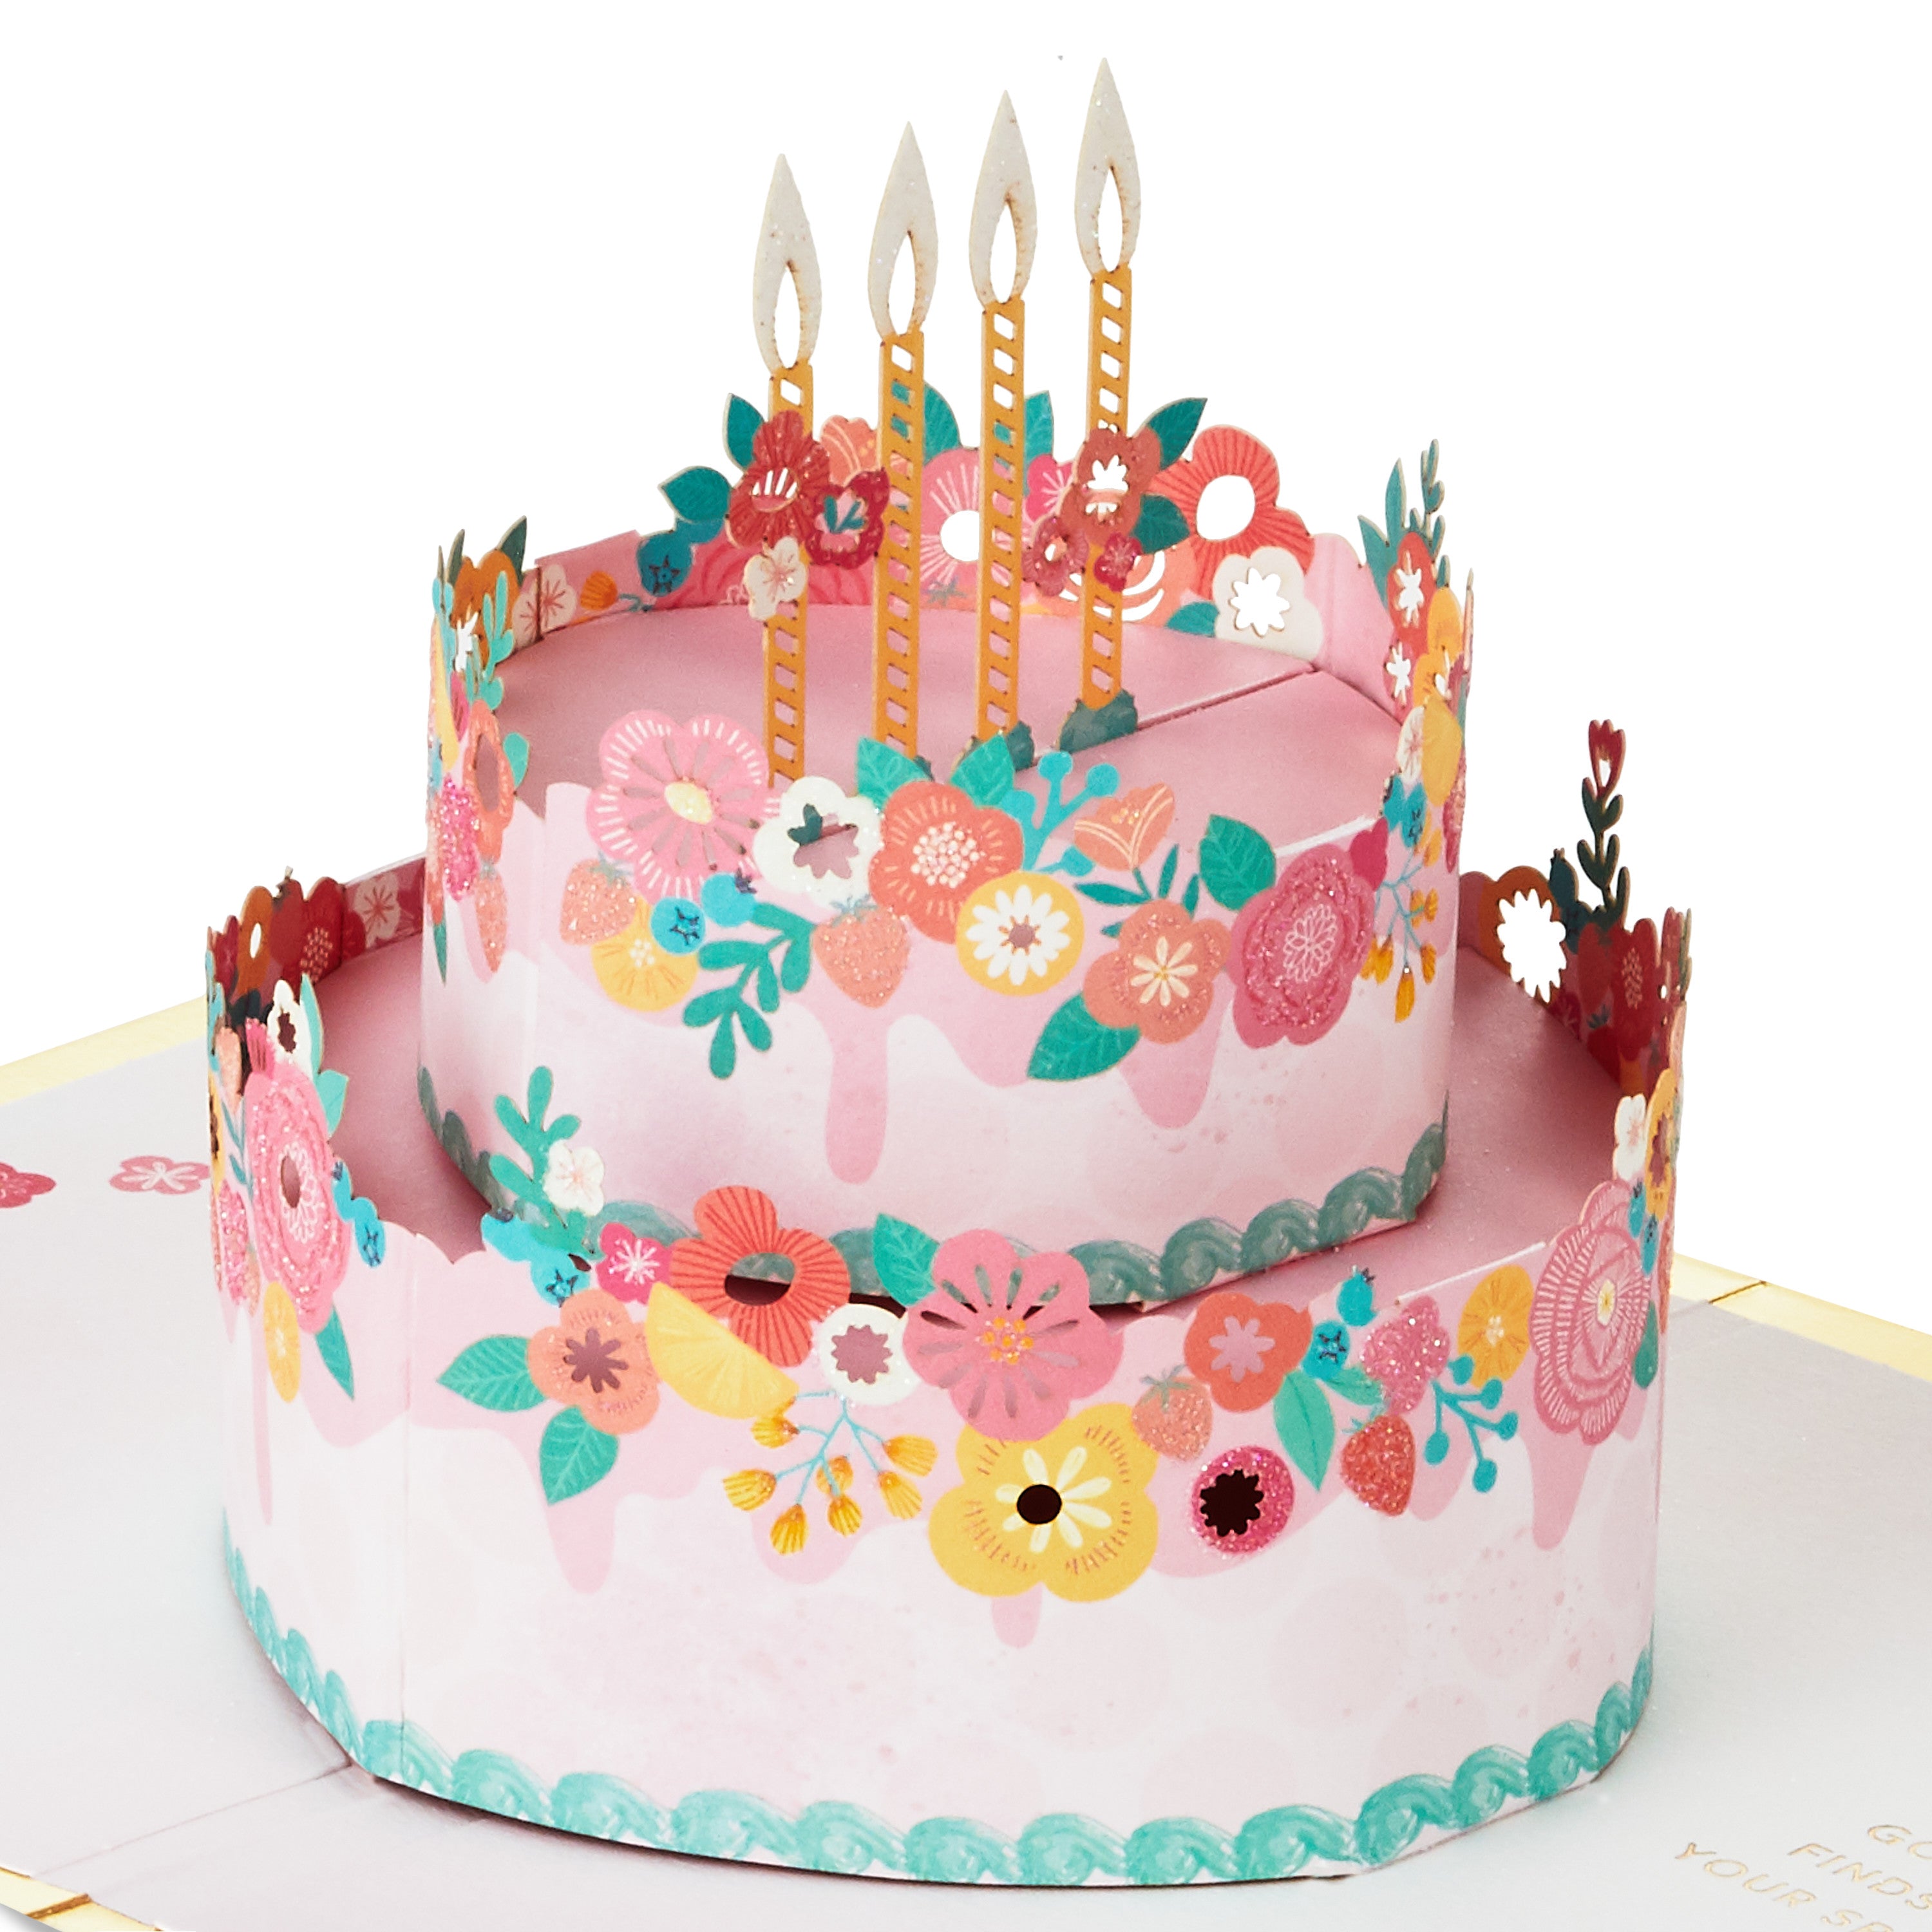  Signature Paper Wonder Pop Up Birthday Card for Women (Floral Birthday Cake)